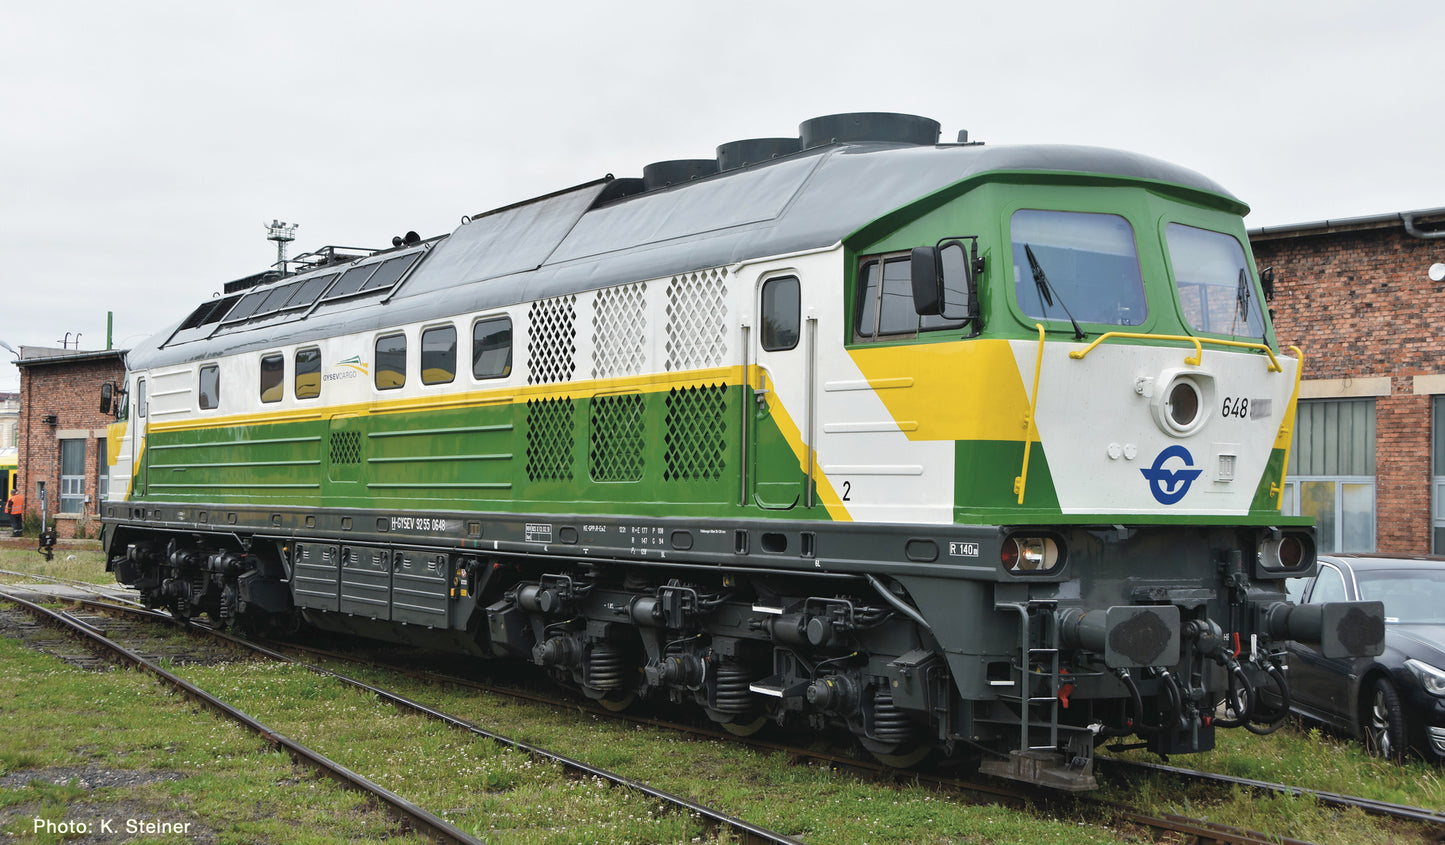 Roco HO 52465 DCC Diesel locomotive class 648 2021 New Item